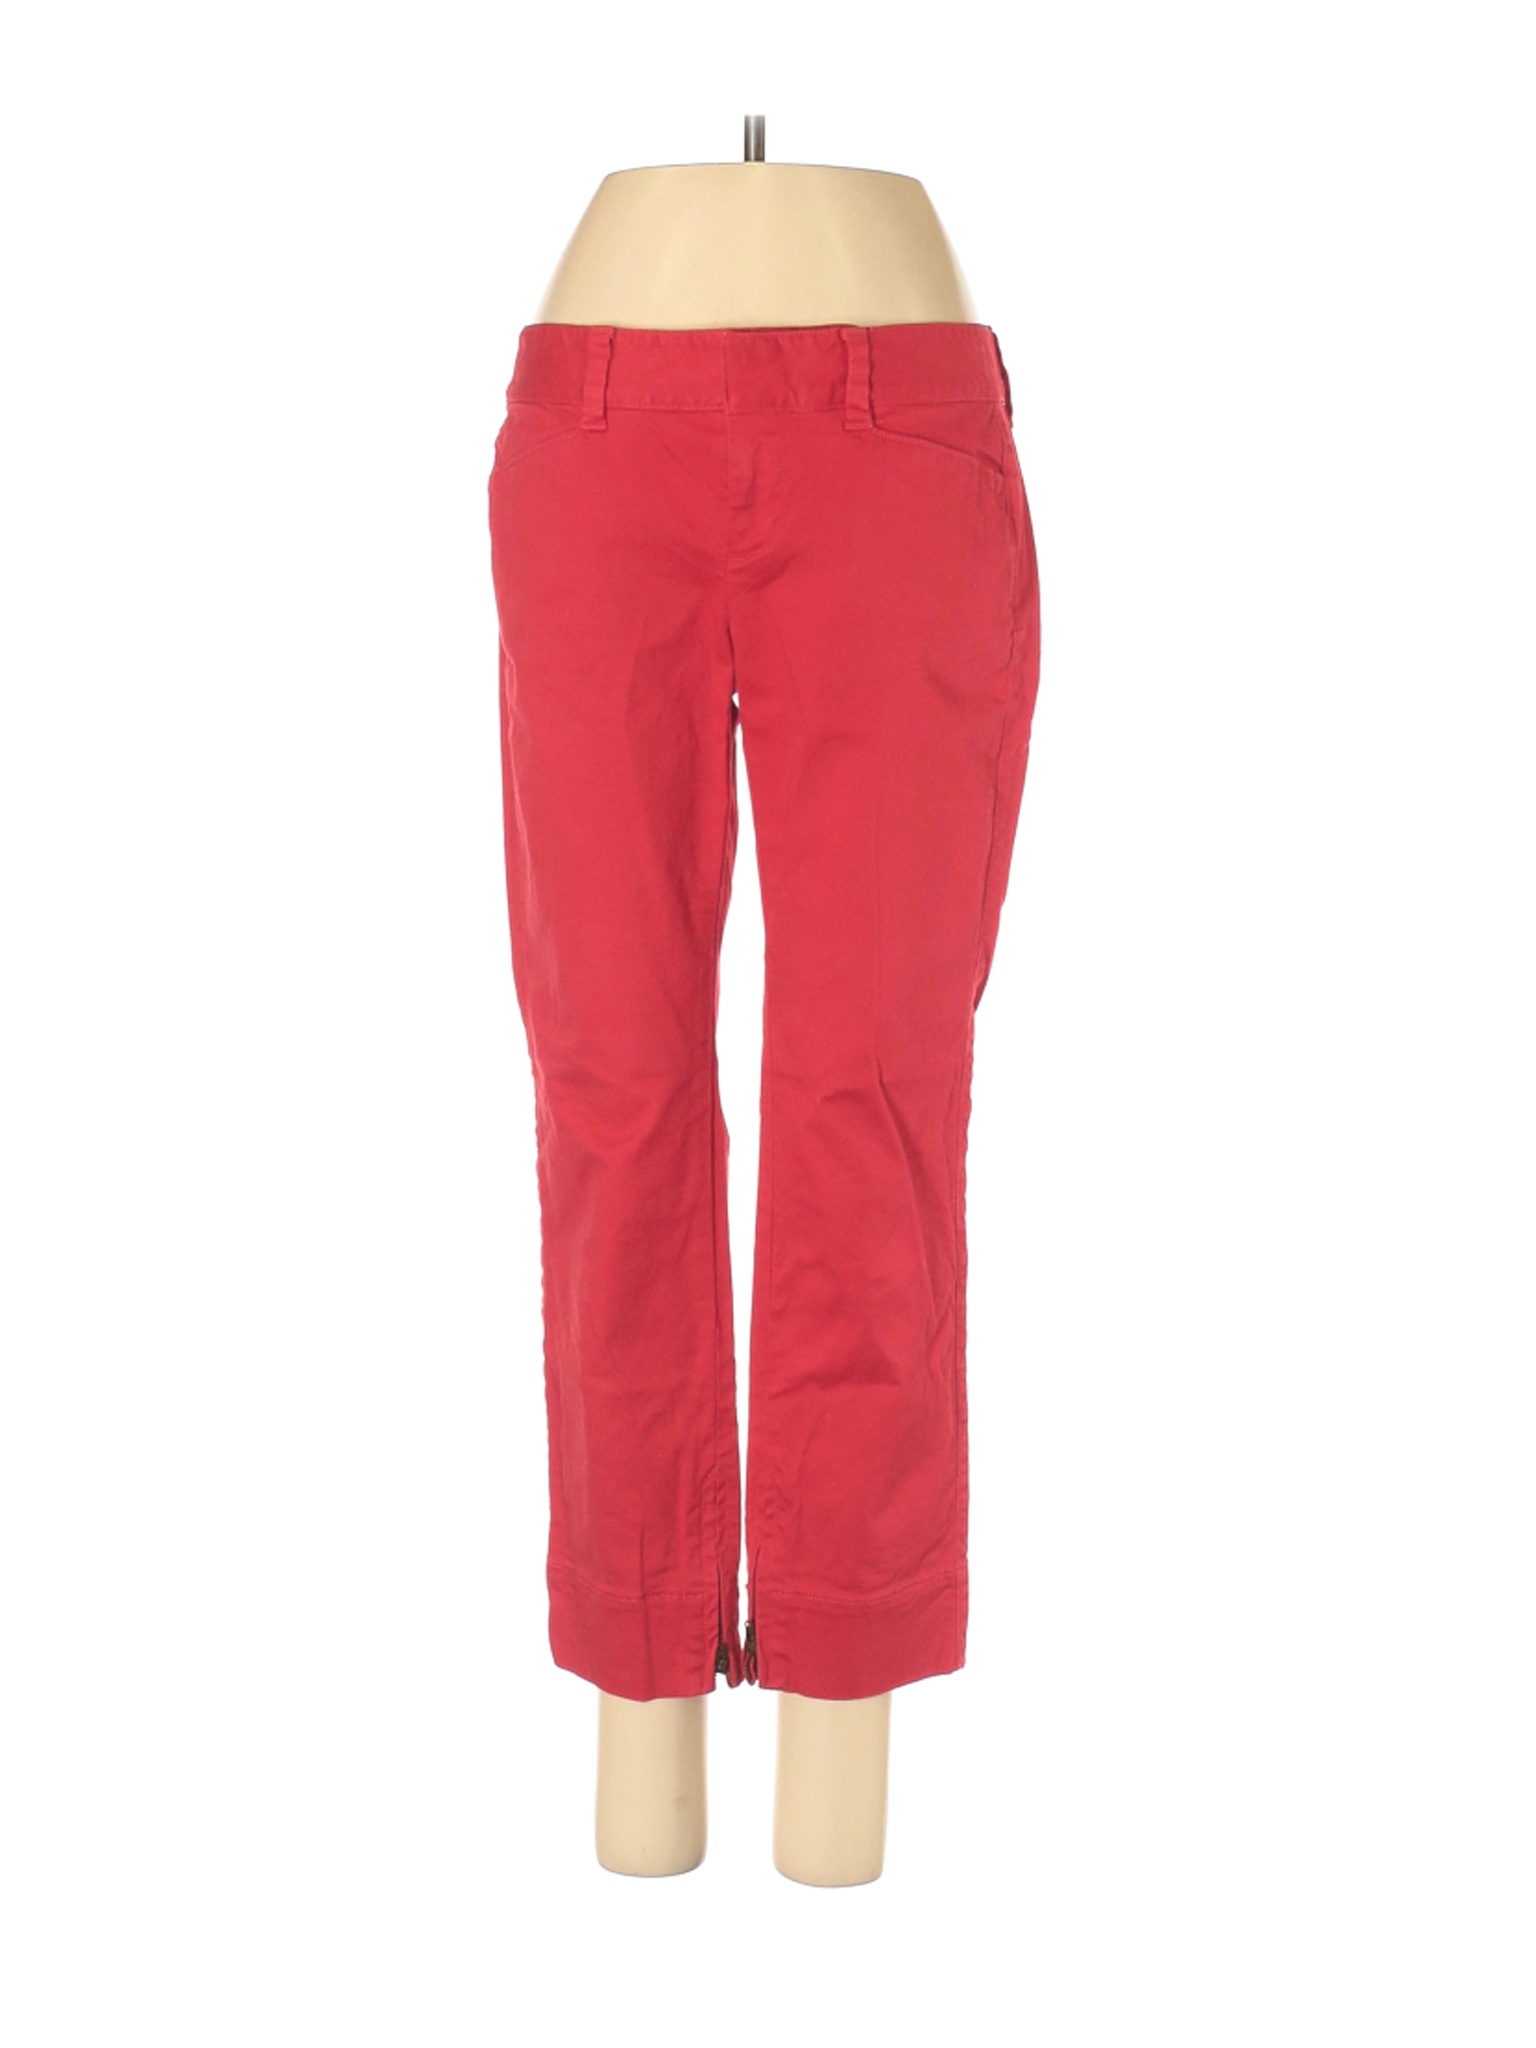 Ann Taylor LOFT Women Red Jeans 0 Petites | eBay